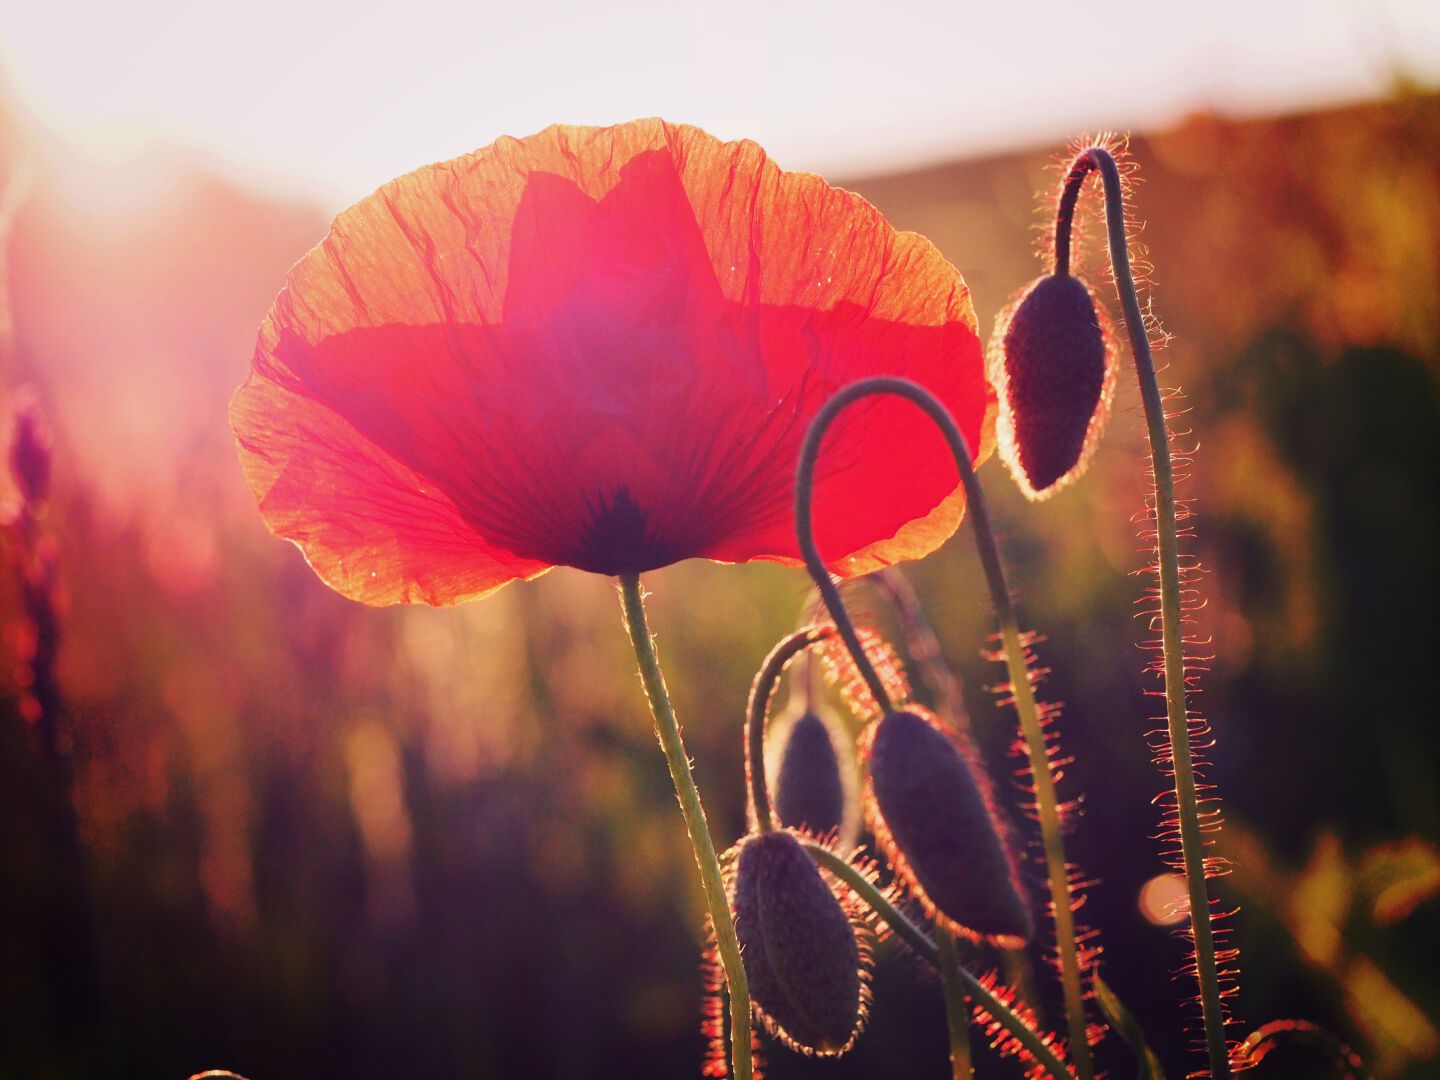 Red kisses your eye

#poppyflowers #red #thatsmysunday #flowerpower #mothernature #backlight #photography